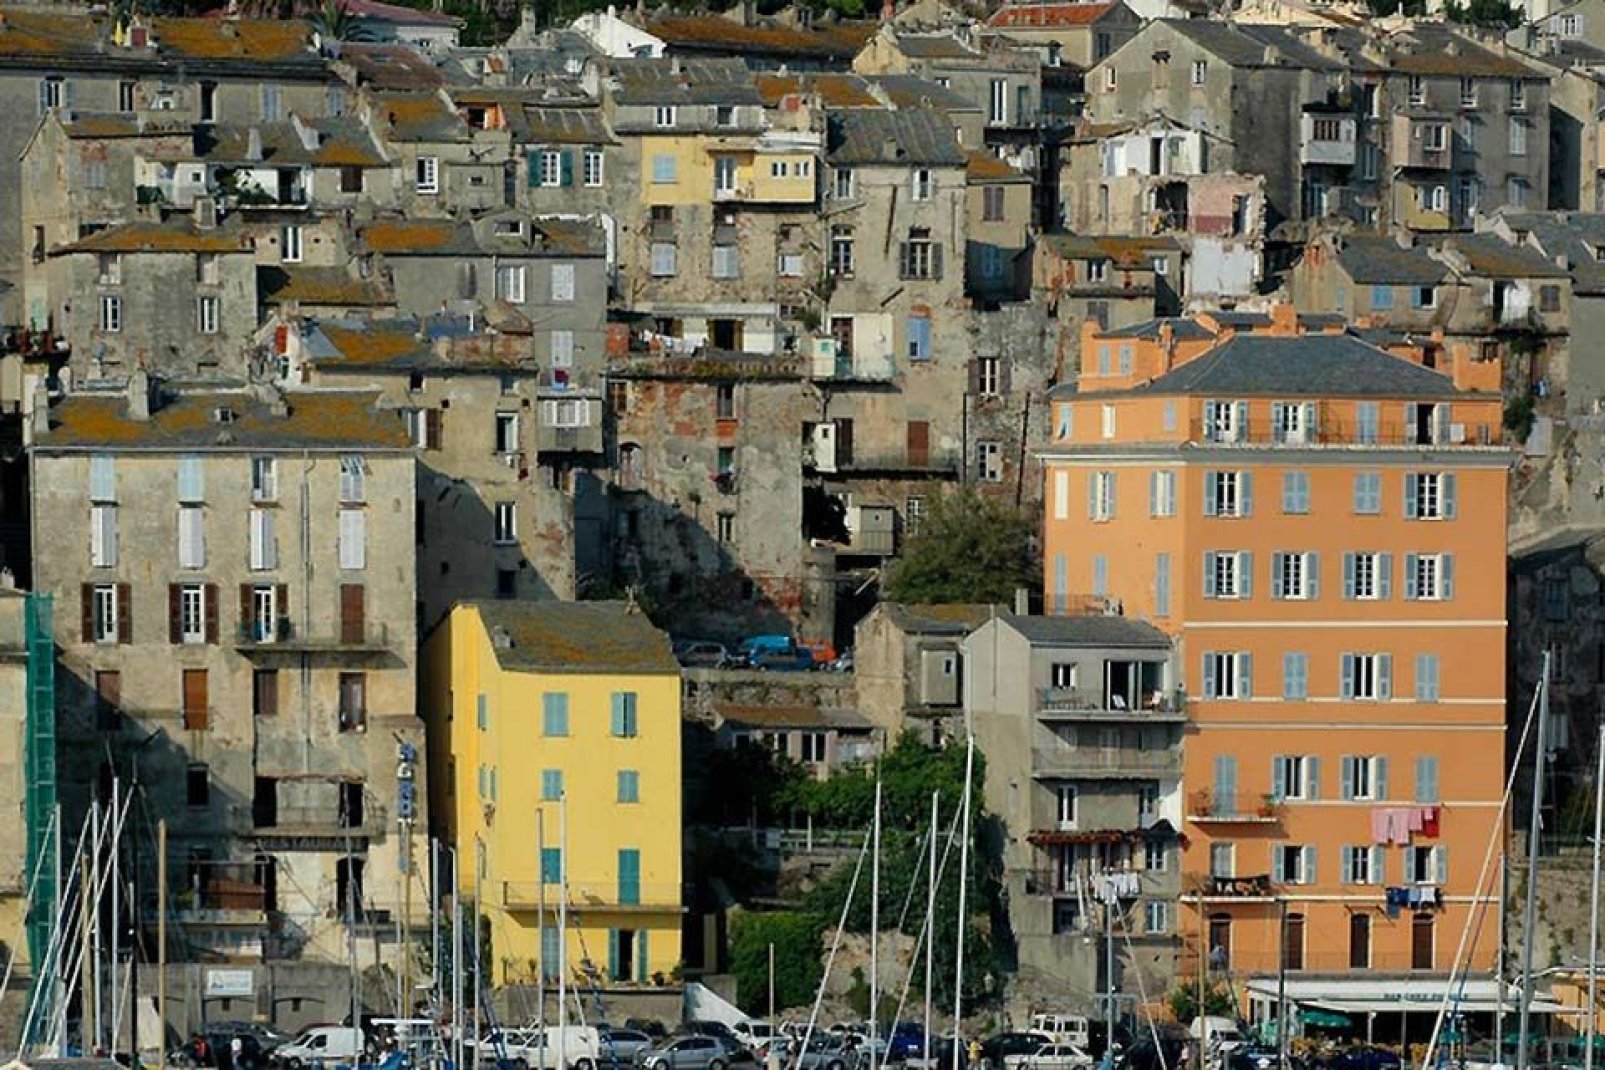 Bastia's city centre reveals numerous 19th century buildings to its visitors.